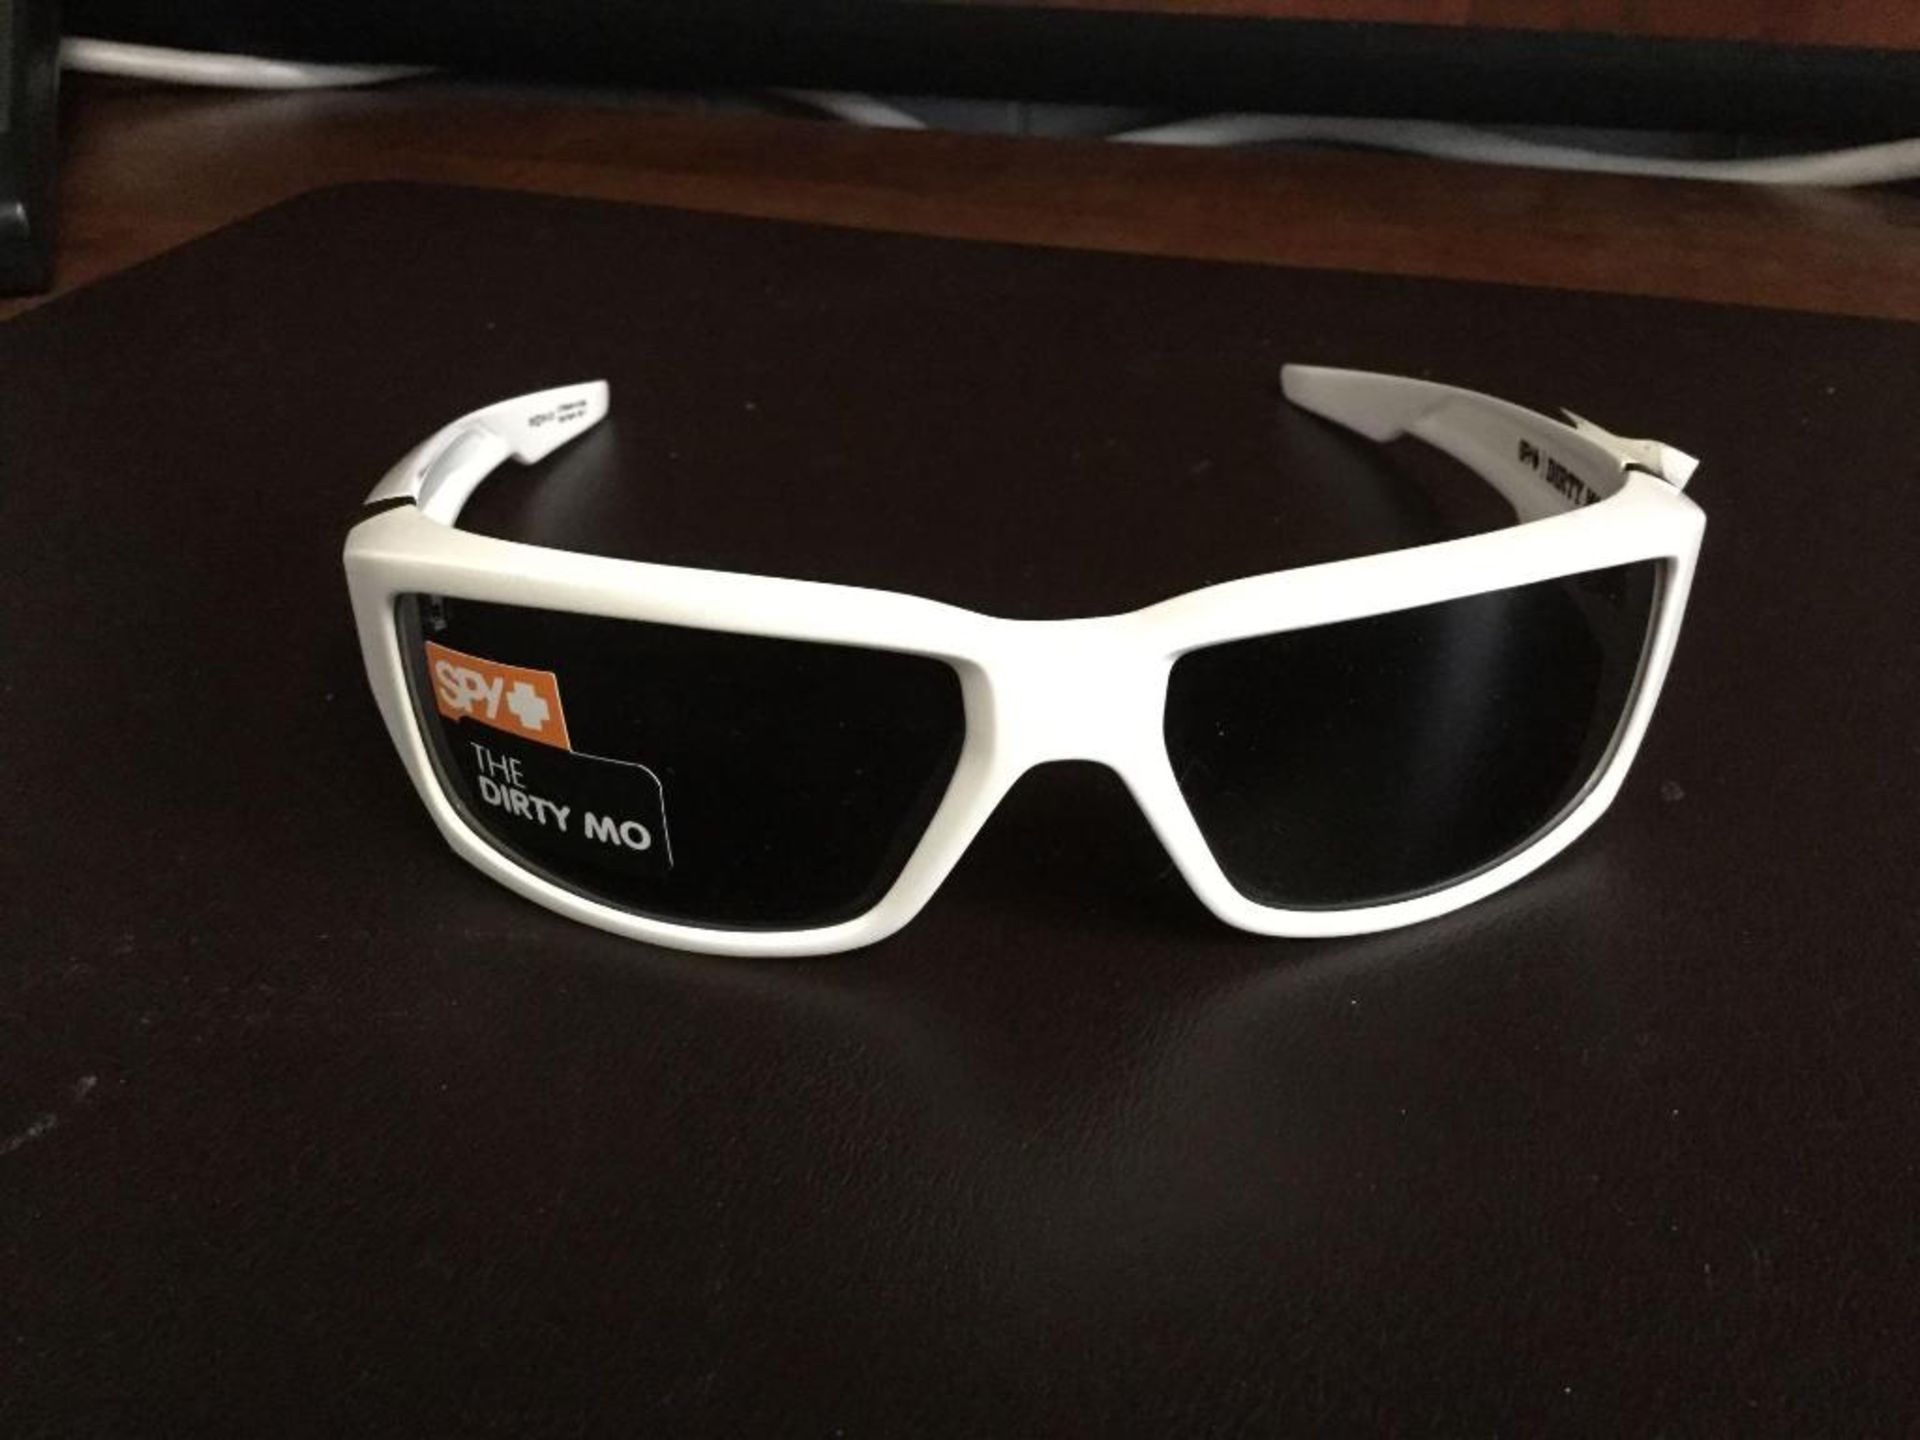 Spy plus - the Dirty Mo Sunglasses Value $170 - Image 2 of 2